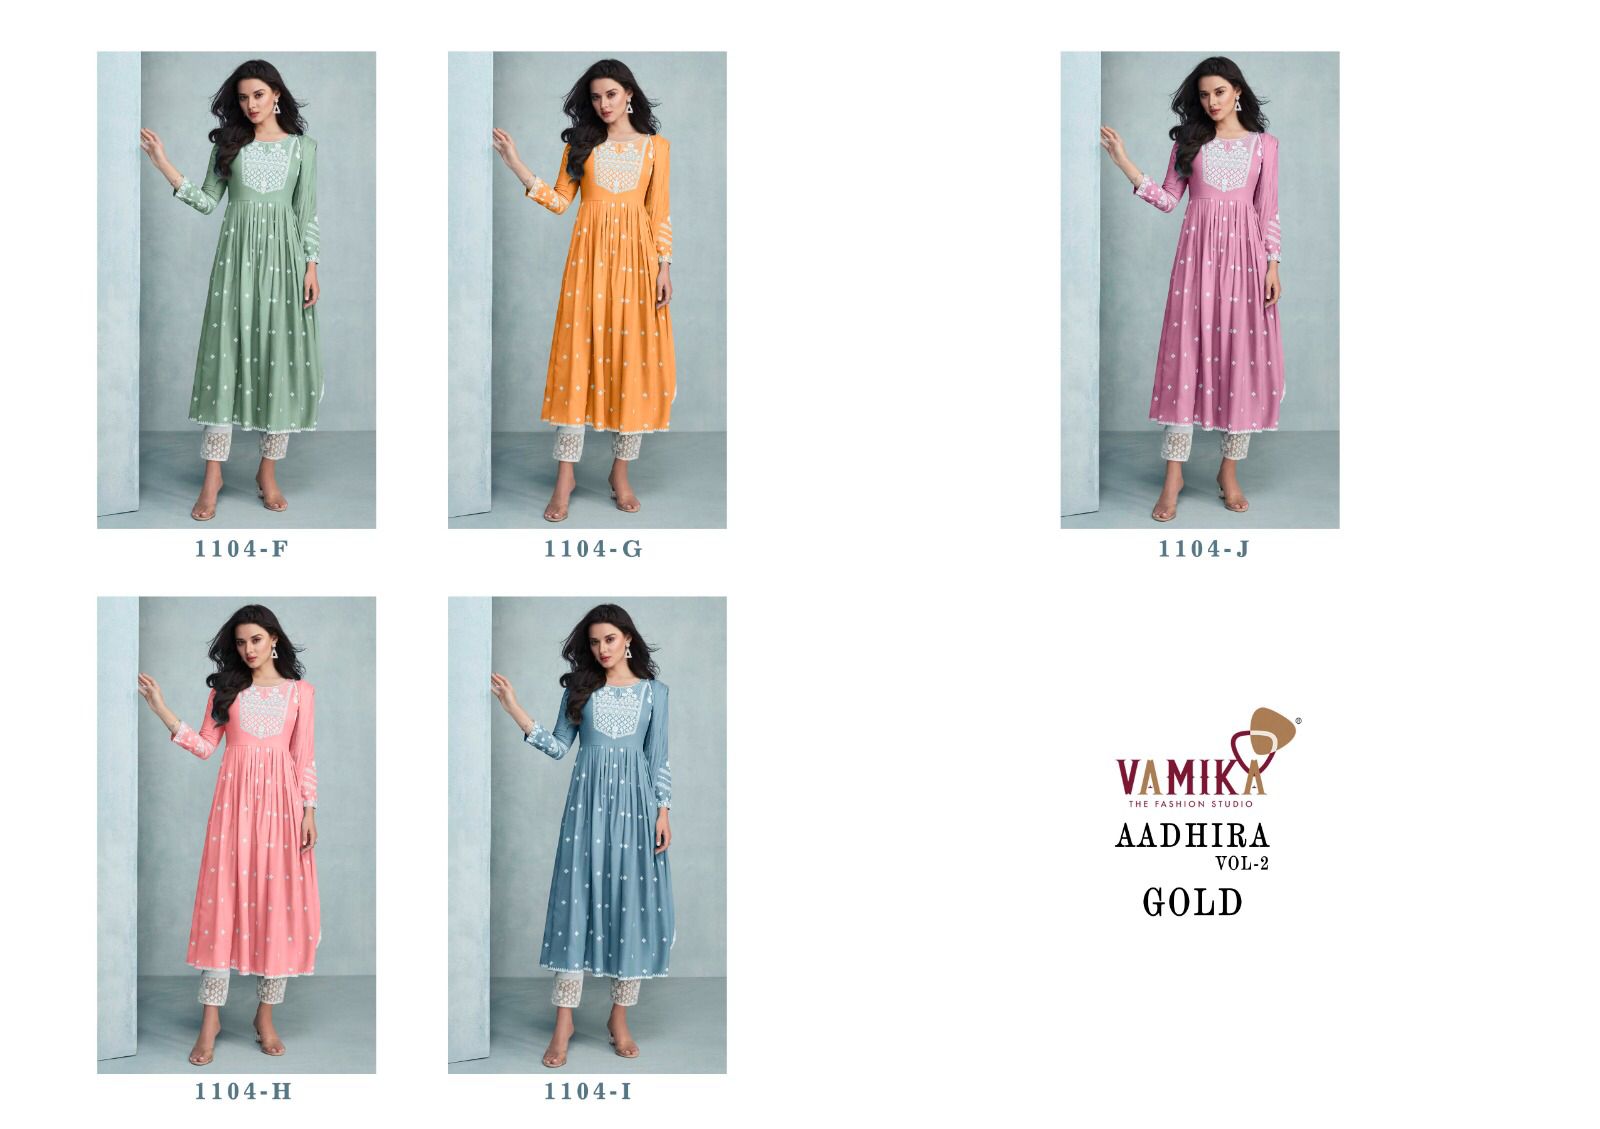 Vamika Aadhira Vol 2 collection 1